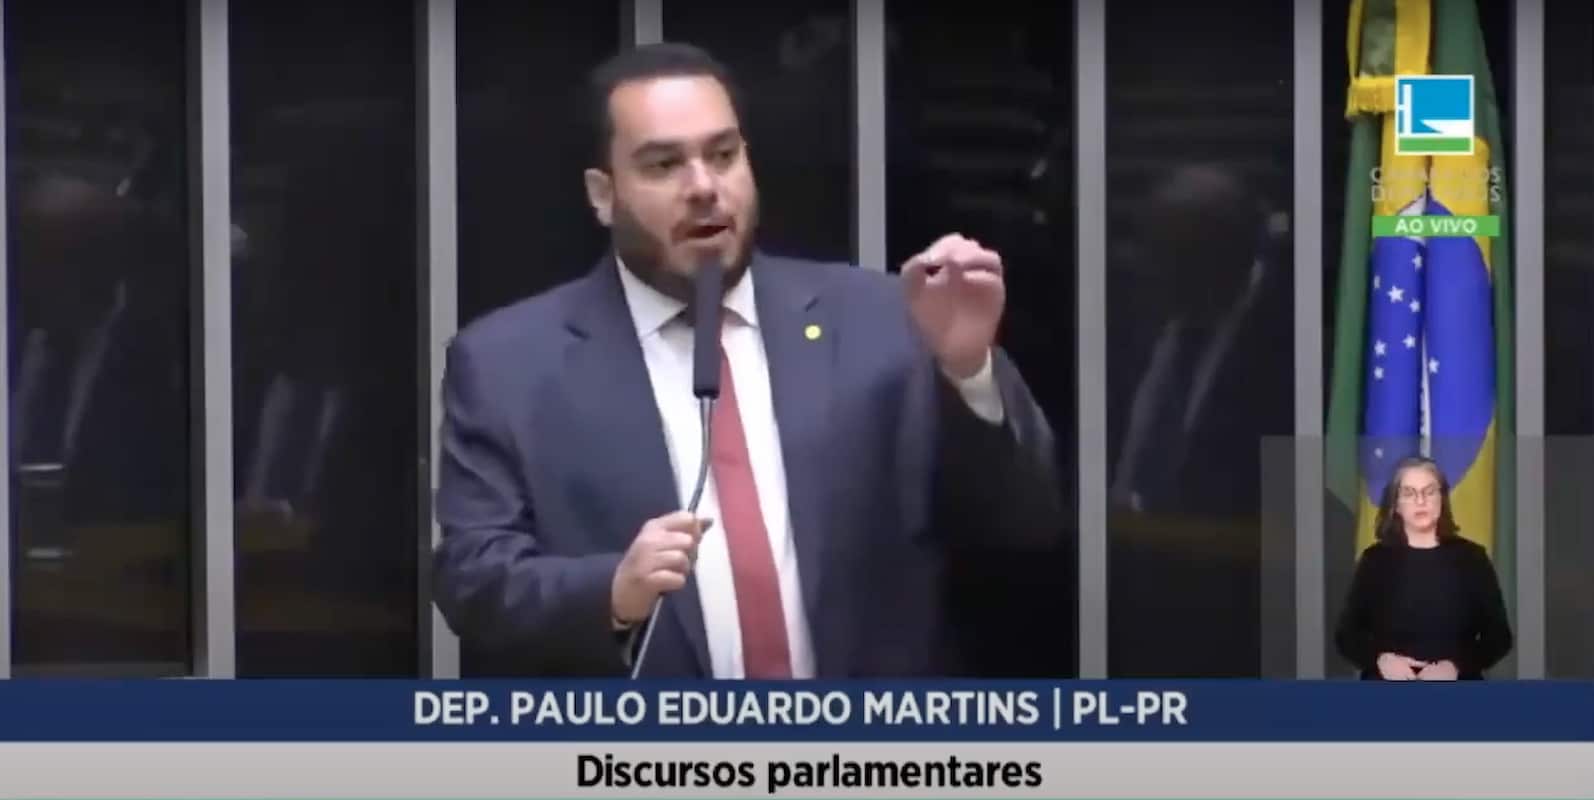 Dep. Paulo Eduardo Martins